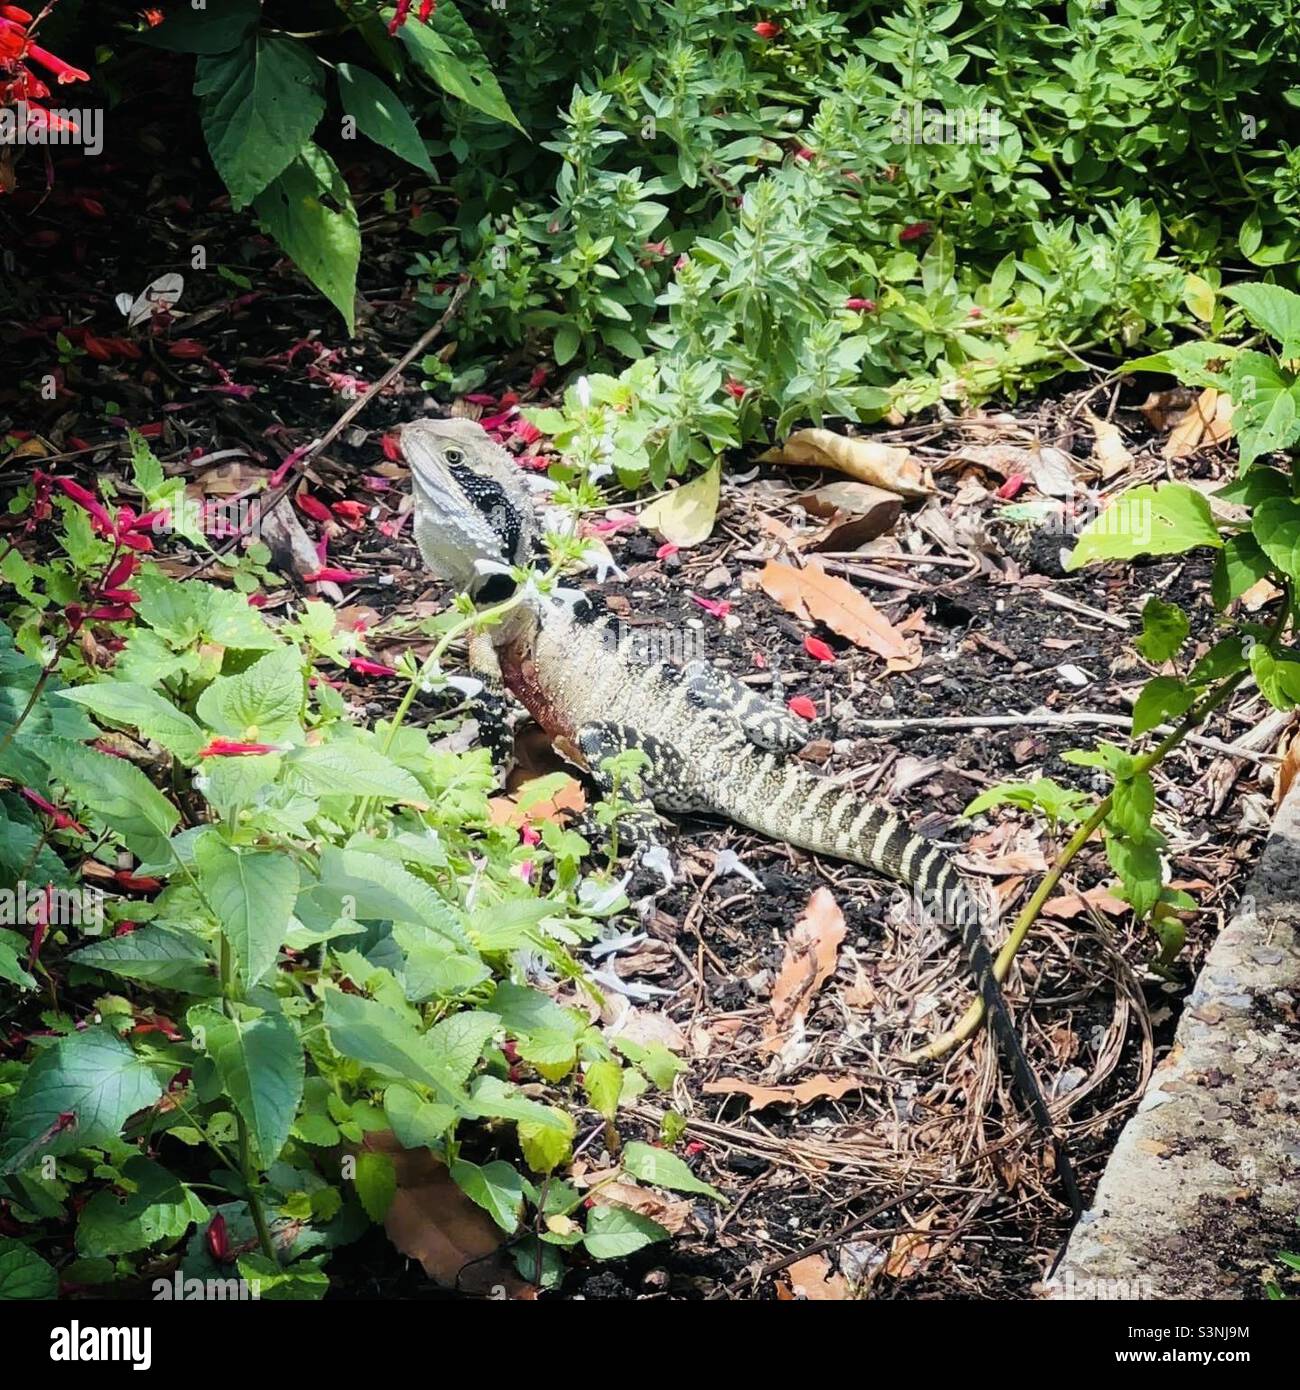 Australian water dragon found outside the backyard. Stock Photo